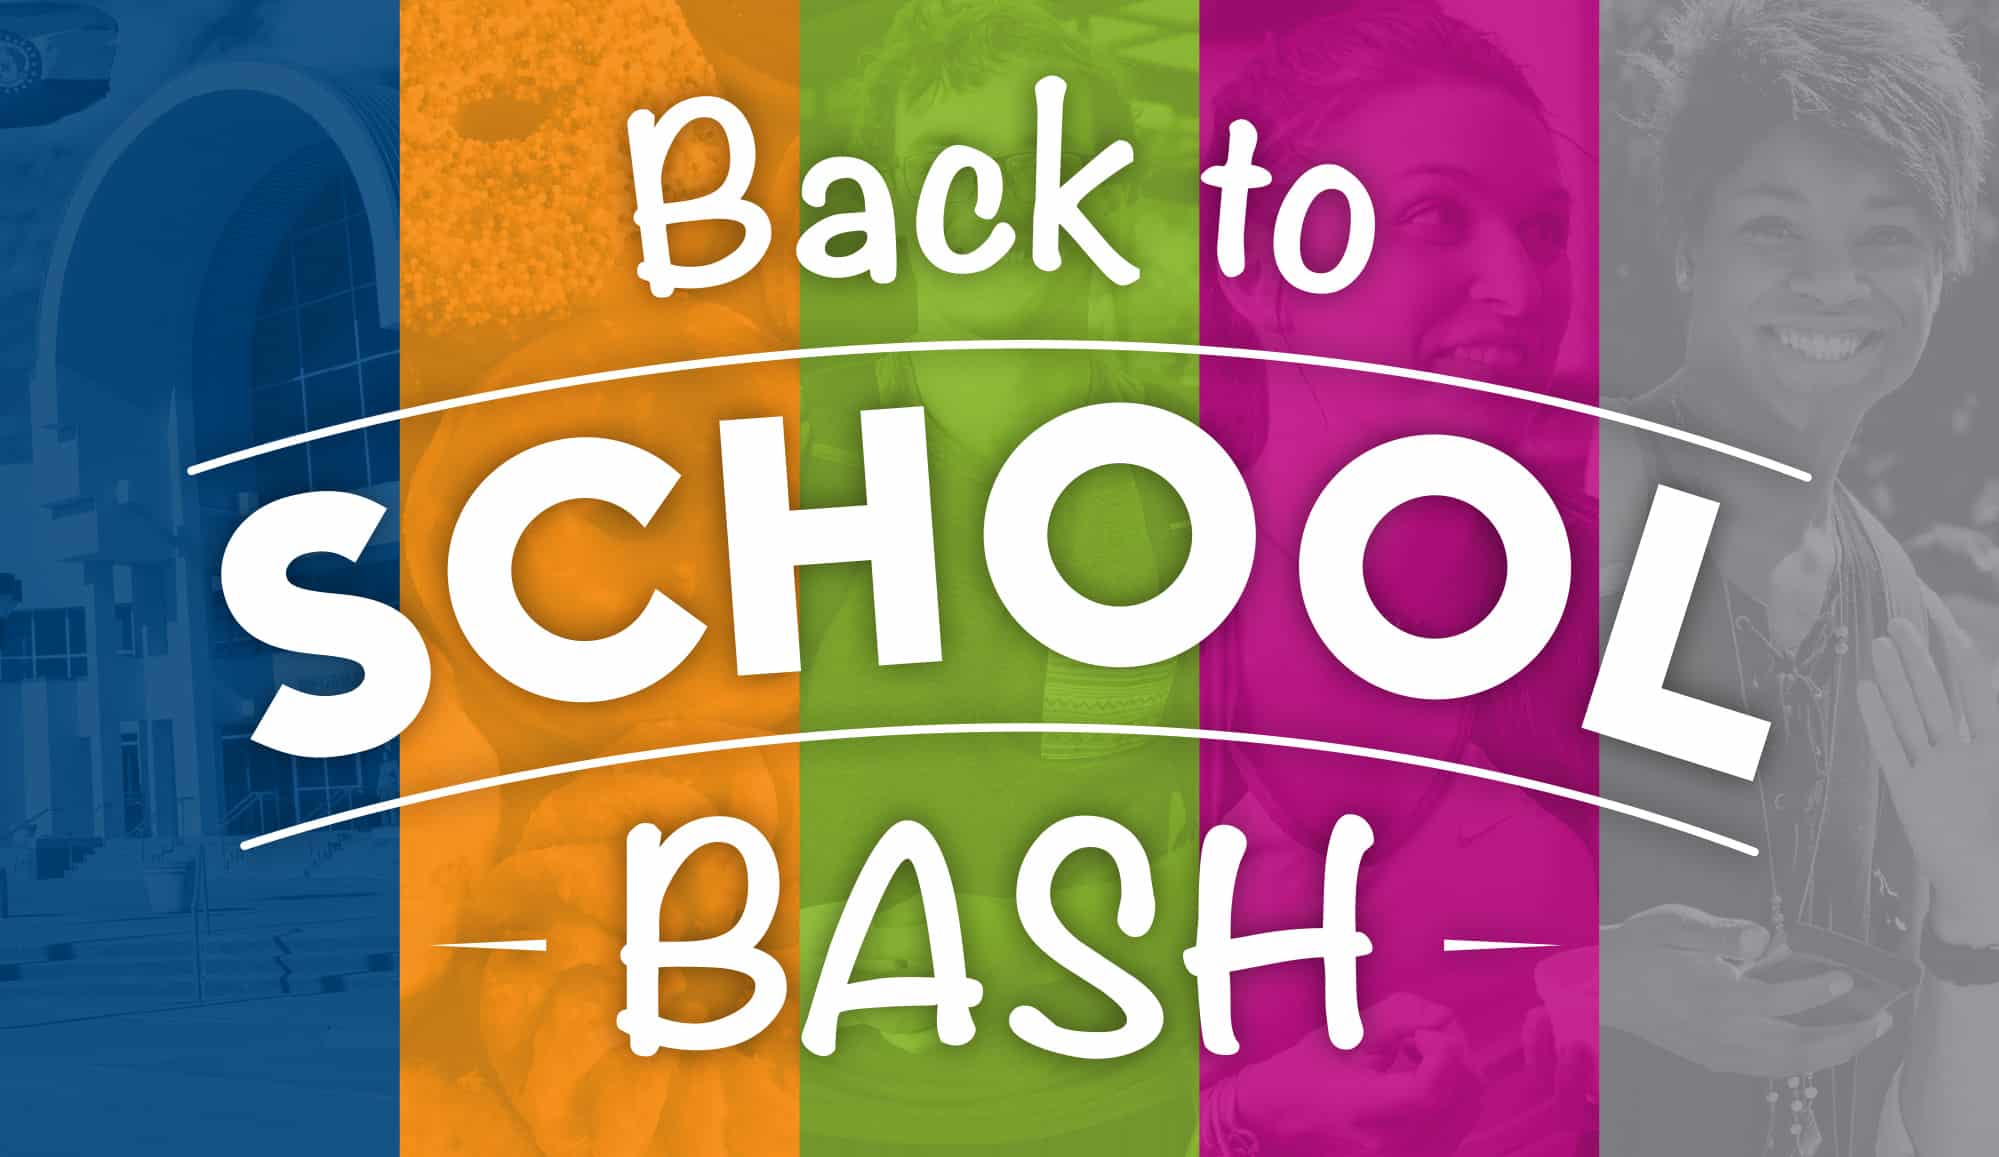 Back to School Bash 2017 blog image